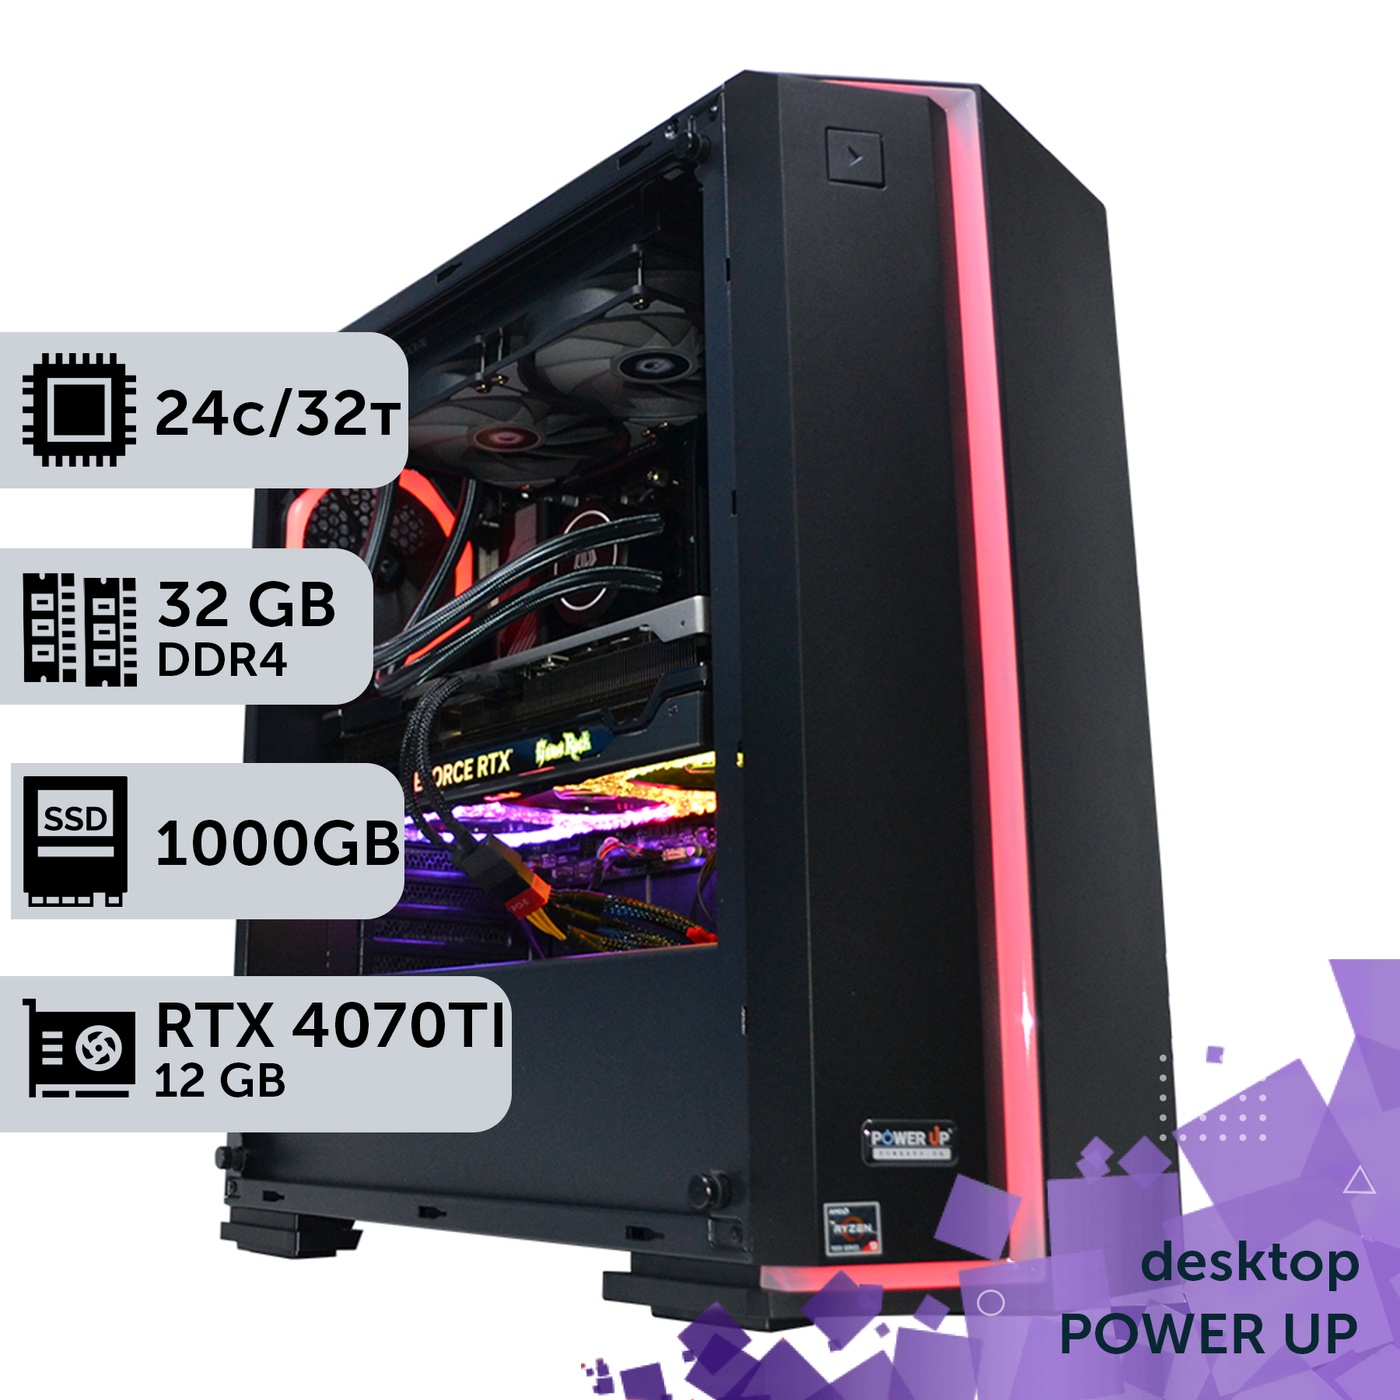 Рабочая станция PowerUp Desktop #197 Core i9 13900K/32 GB/SSD 1TB/GeForce RTX 4070Ti 12GB